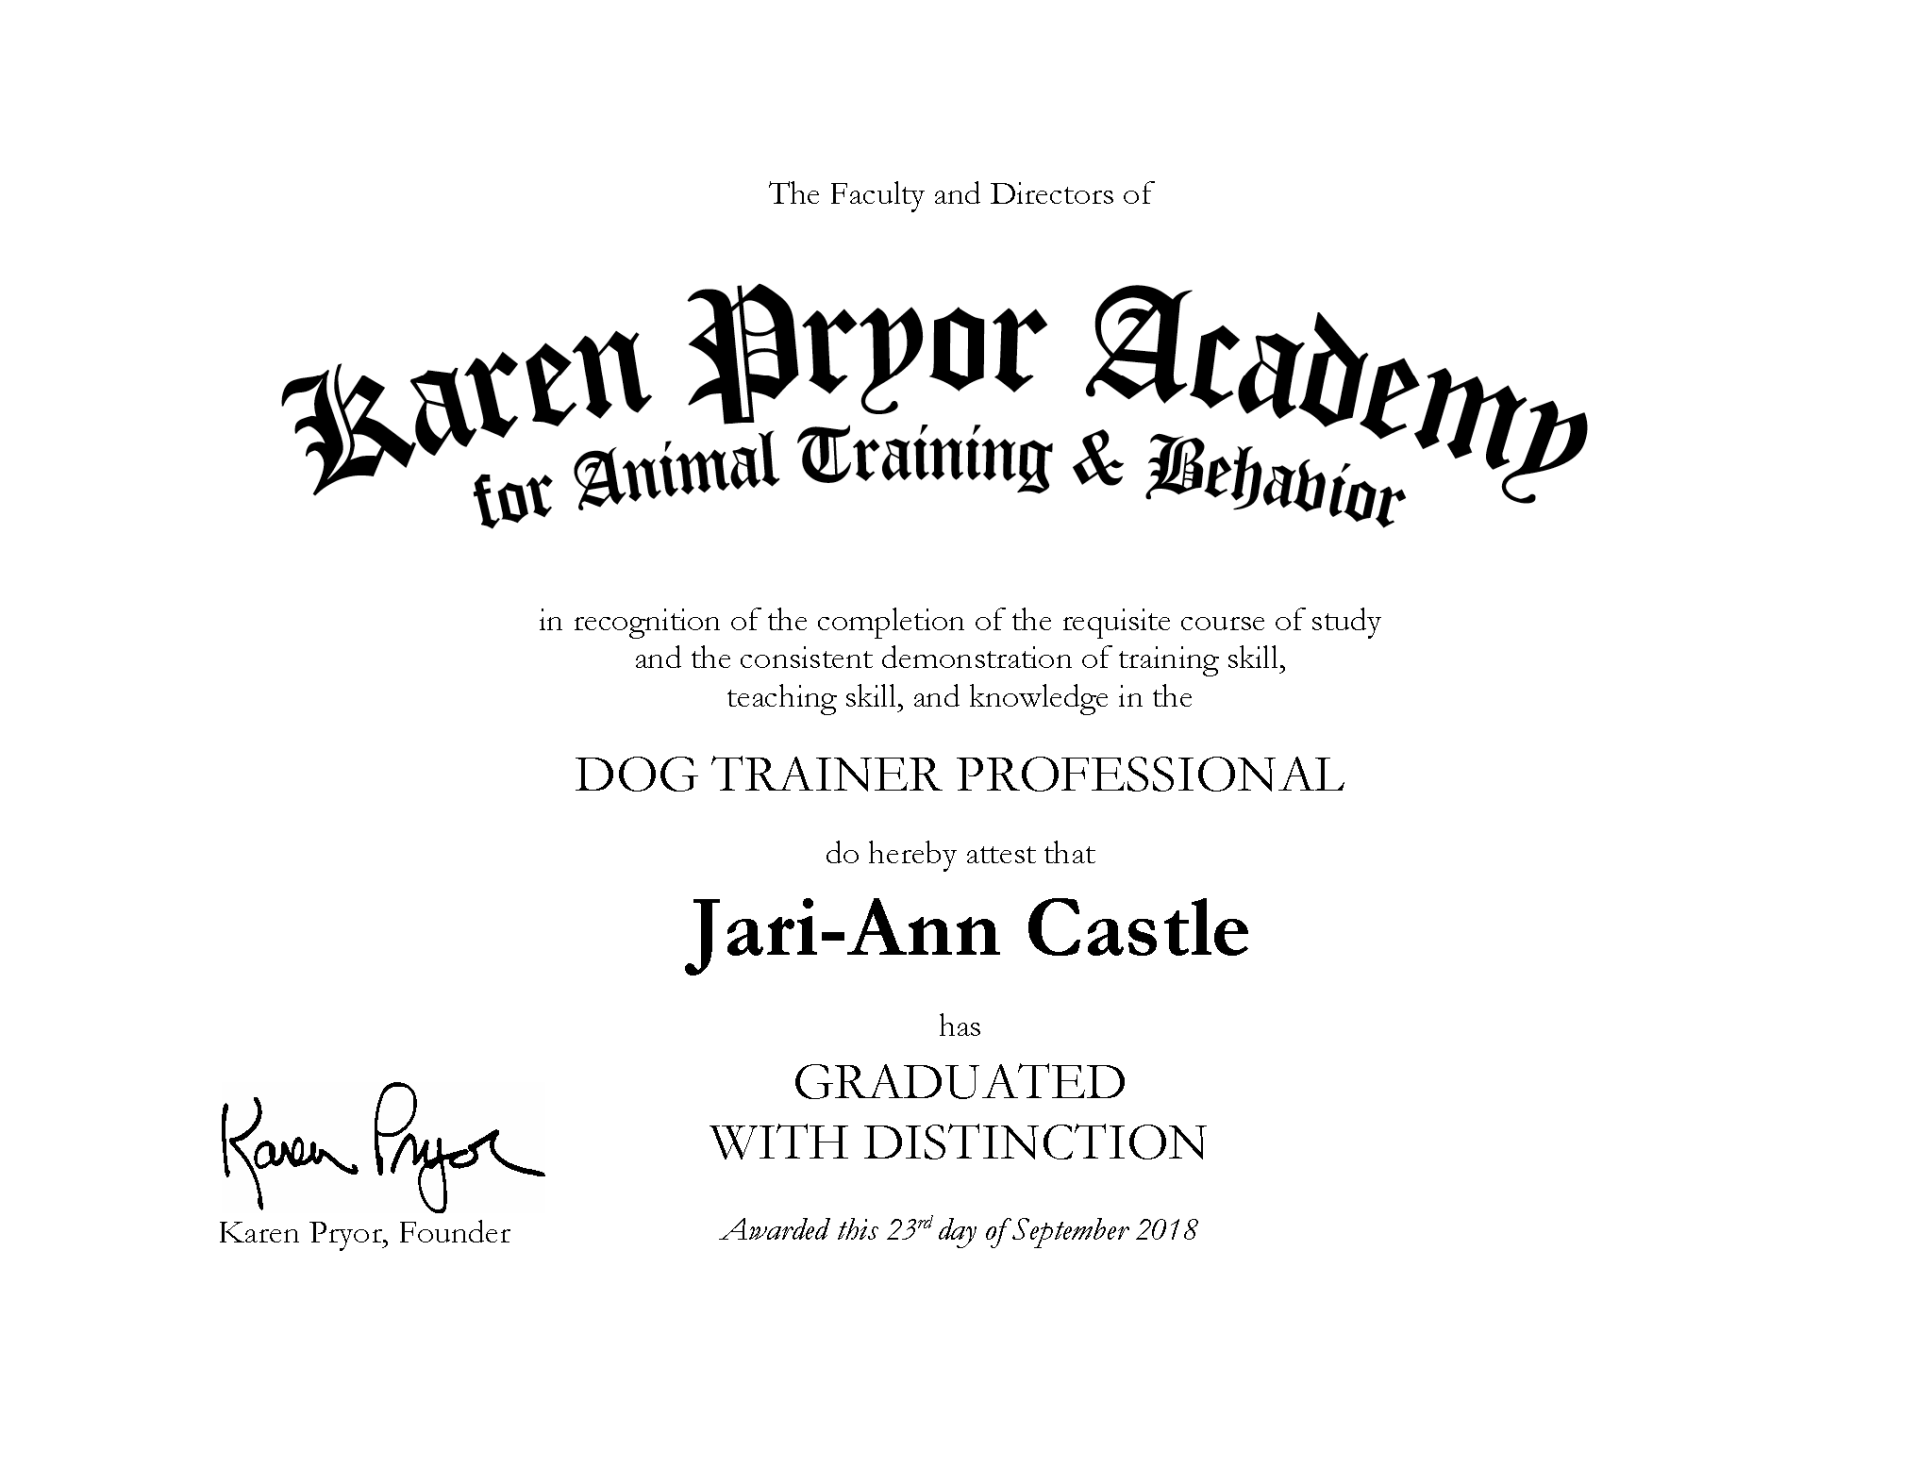 Karen Pryor Professional Dog Trainer